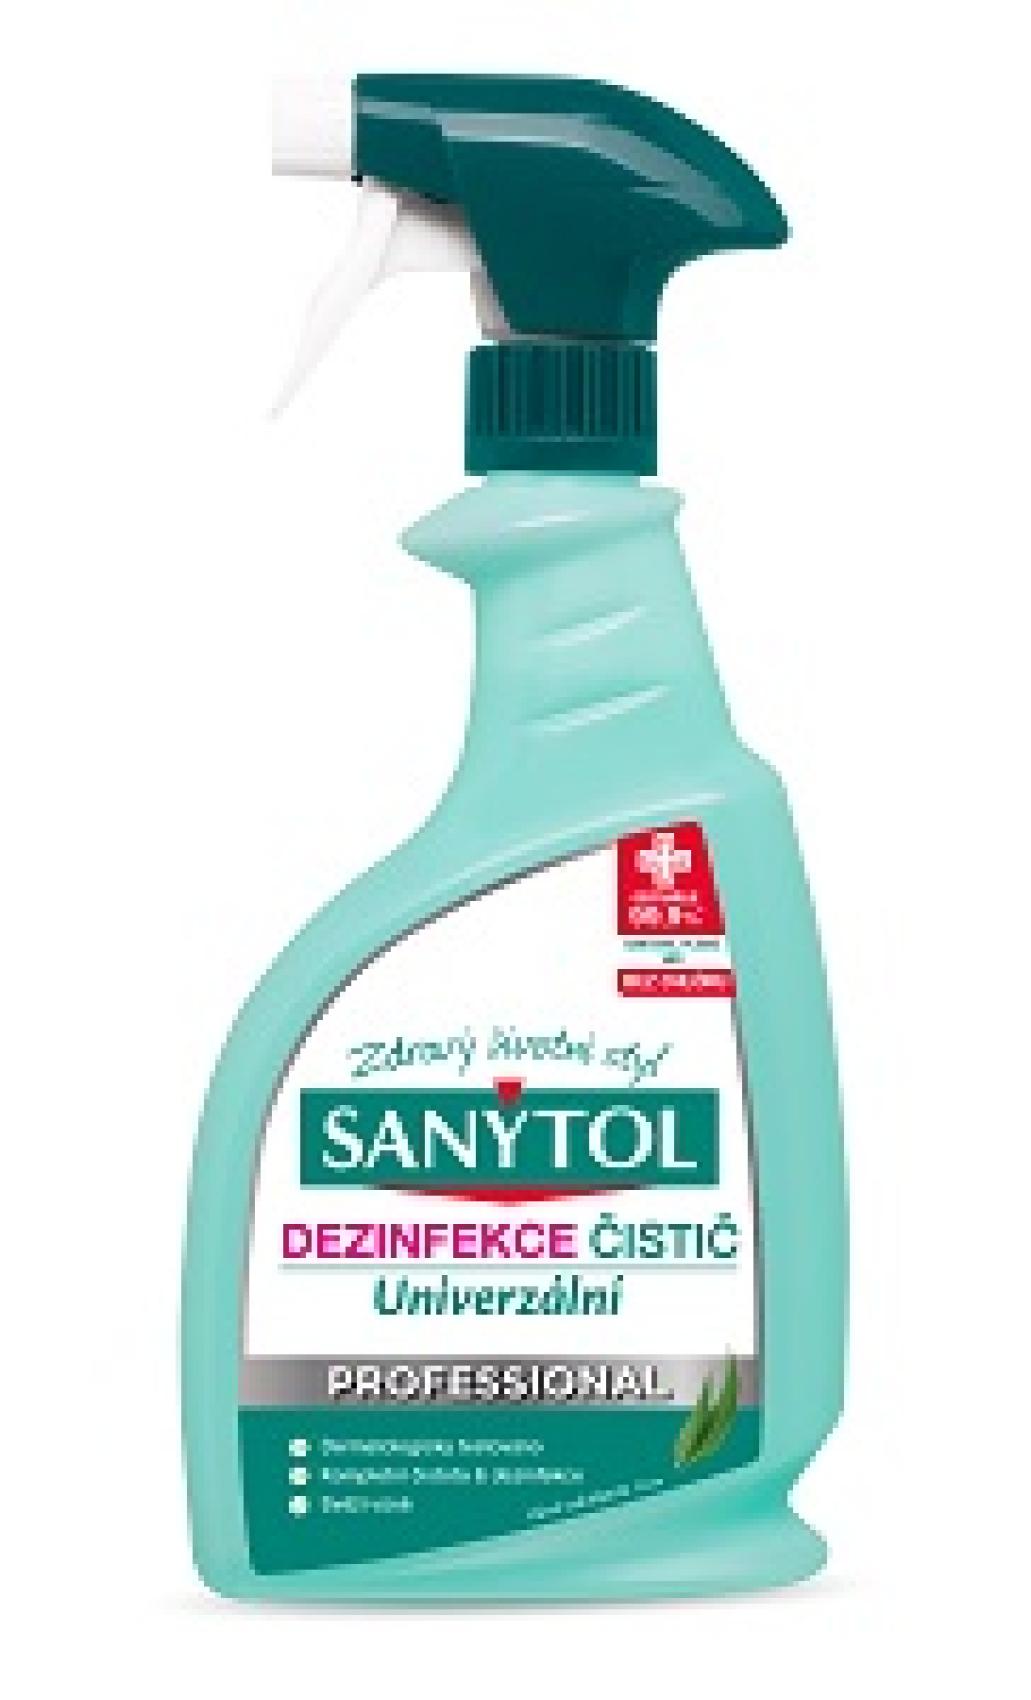 Sanytol Professional dezinfekce univerzln rozpraova 750ml